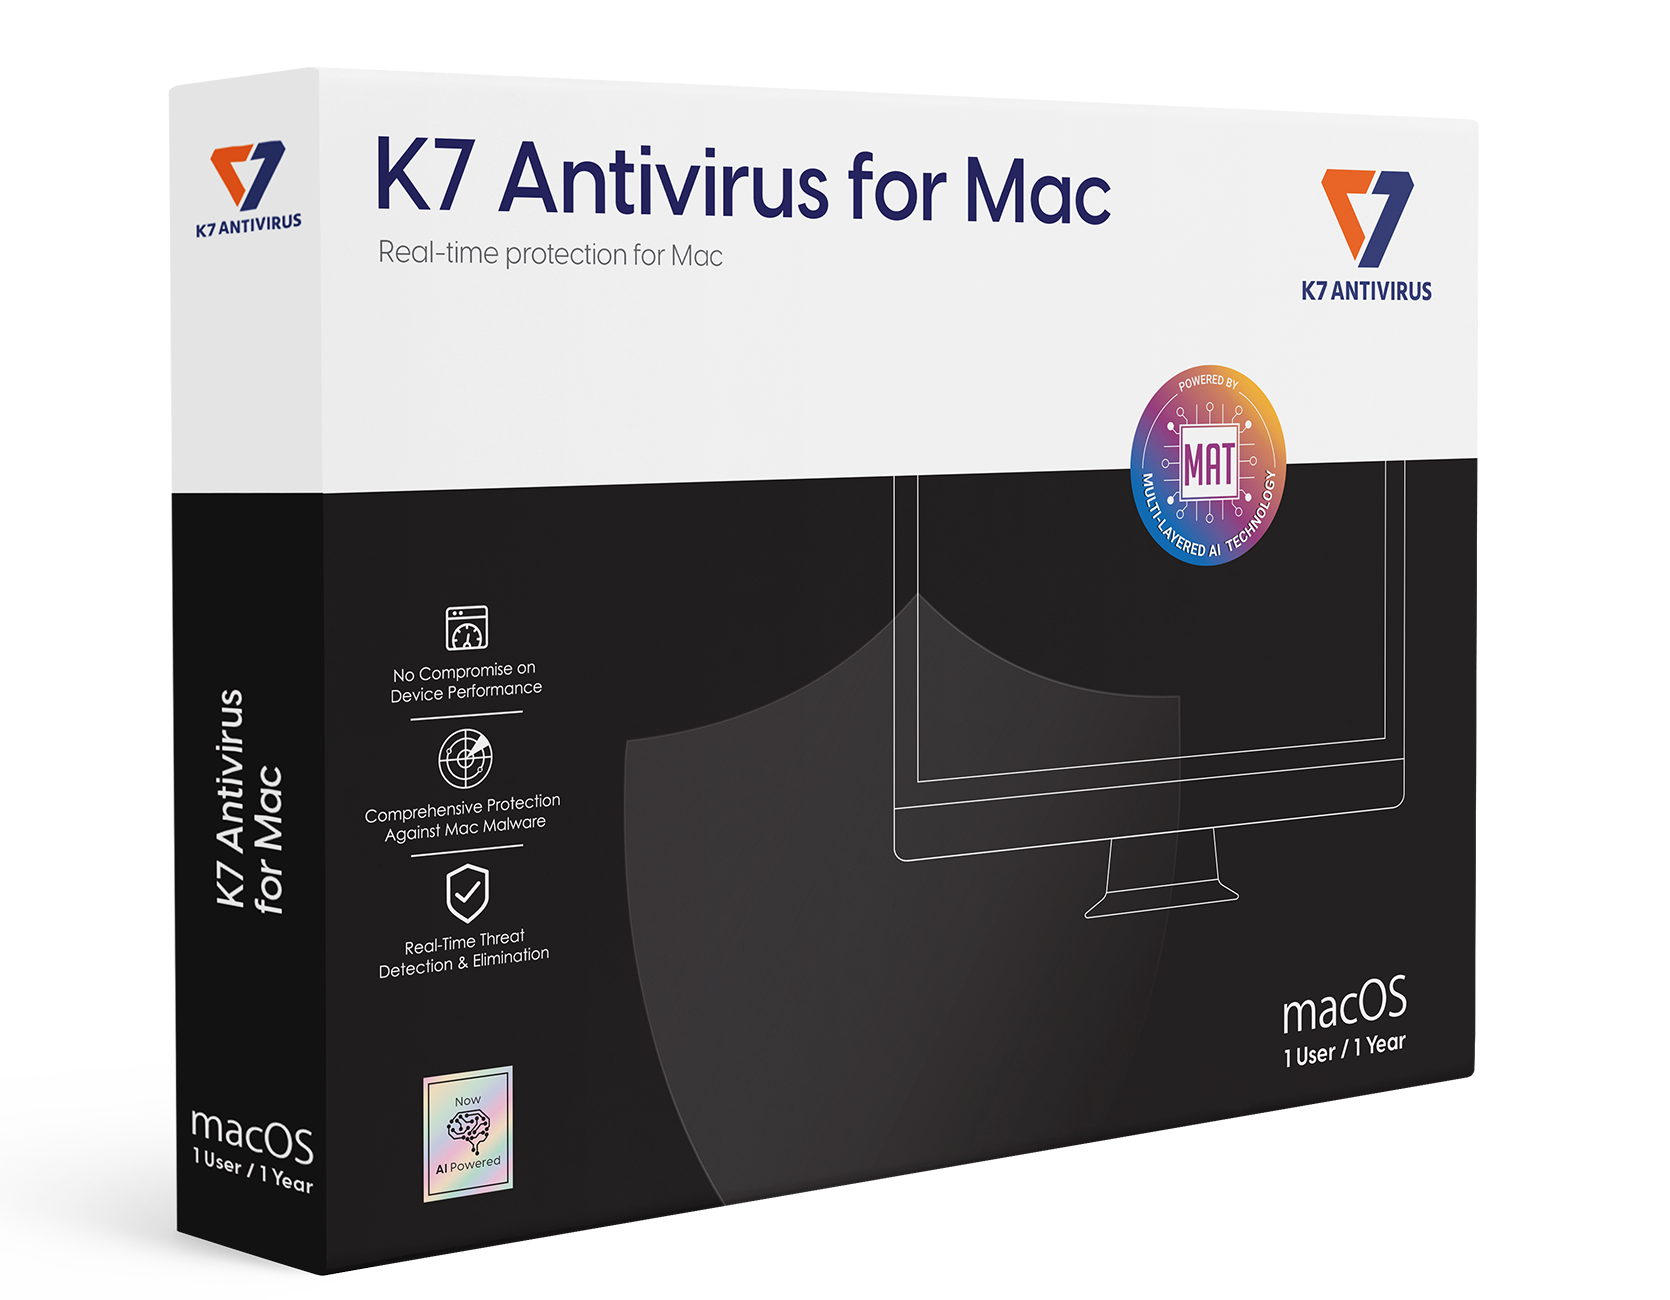 K7 antivirus for mac